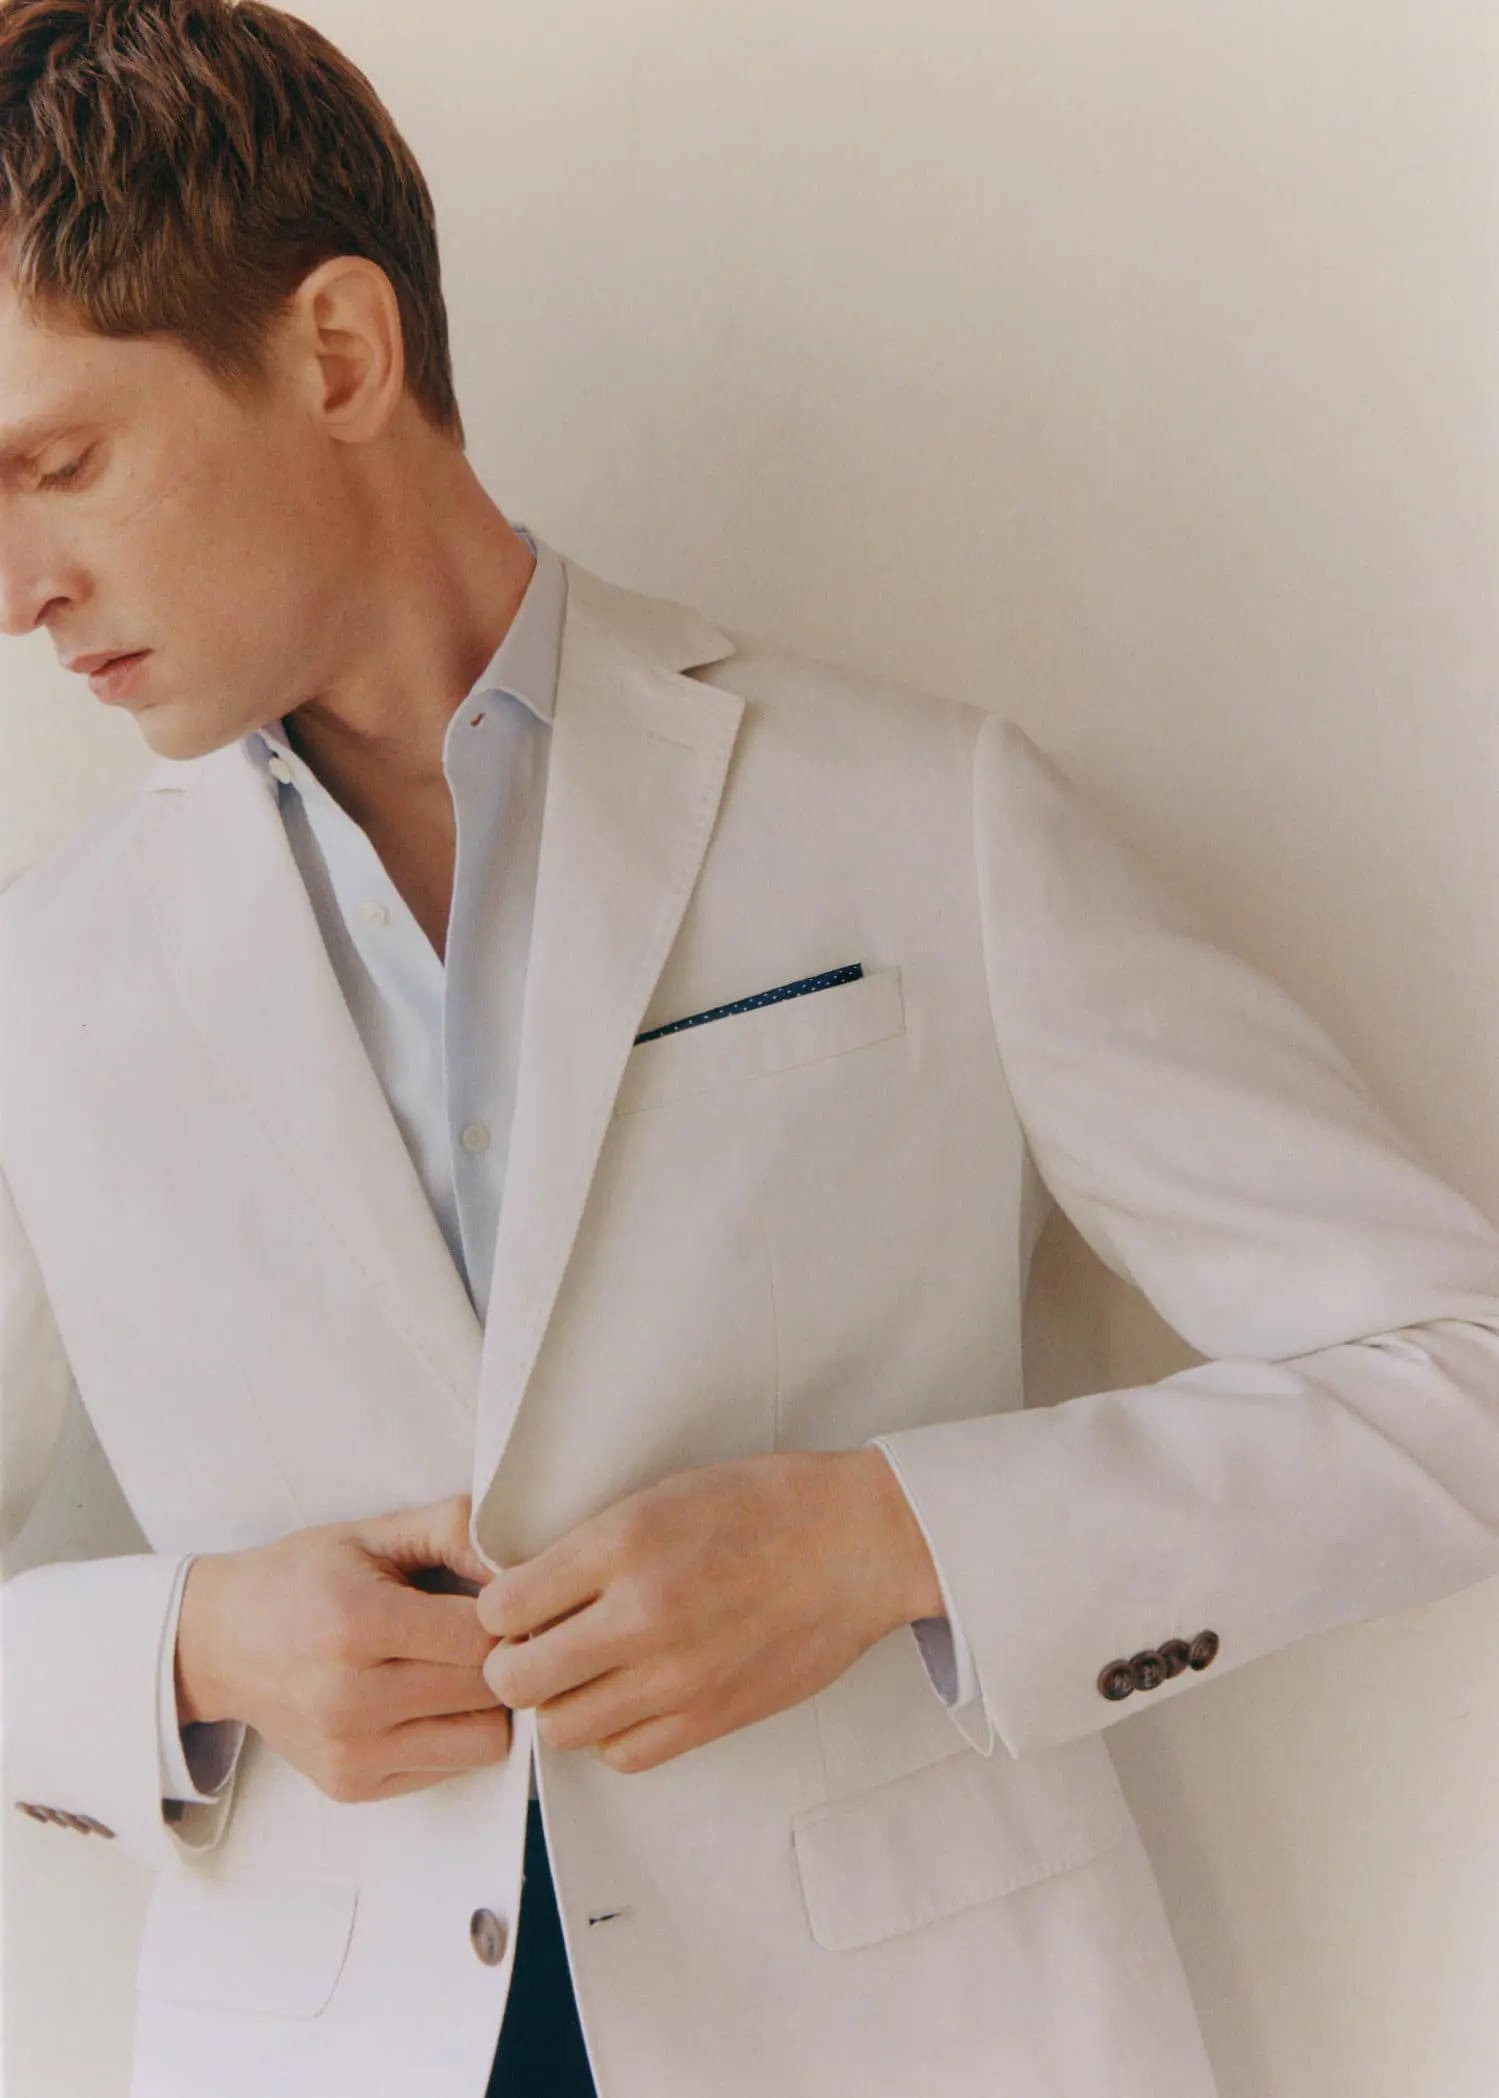 Mango 100% linen suit blazer. a man in a white suit is fixing his tie. 